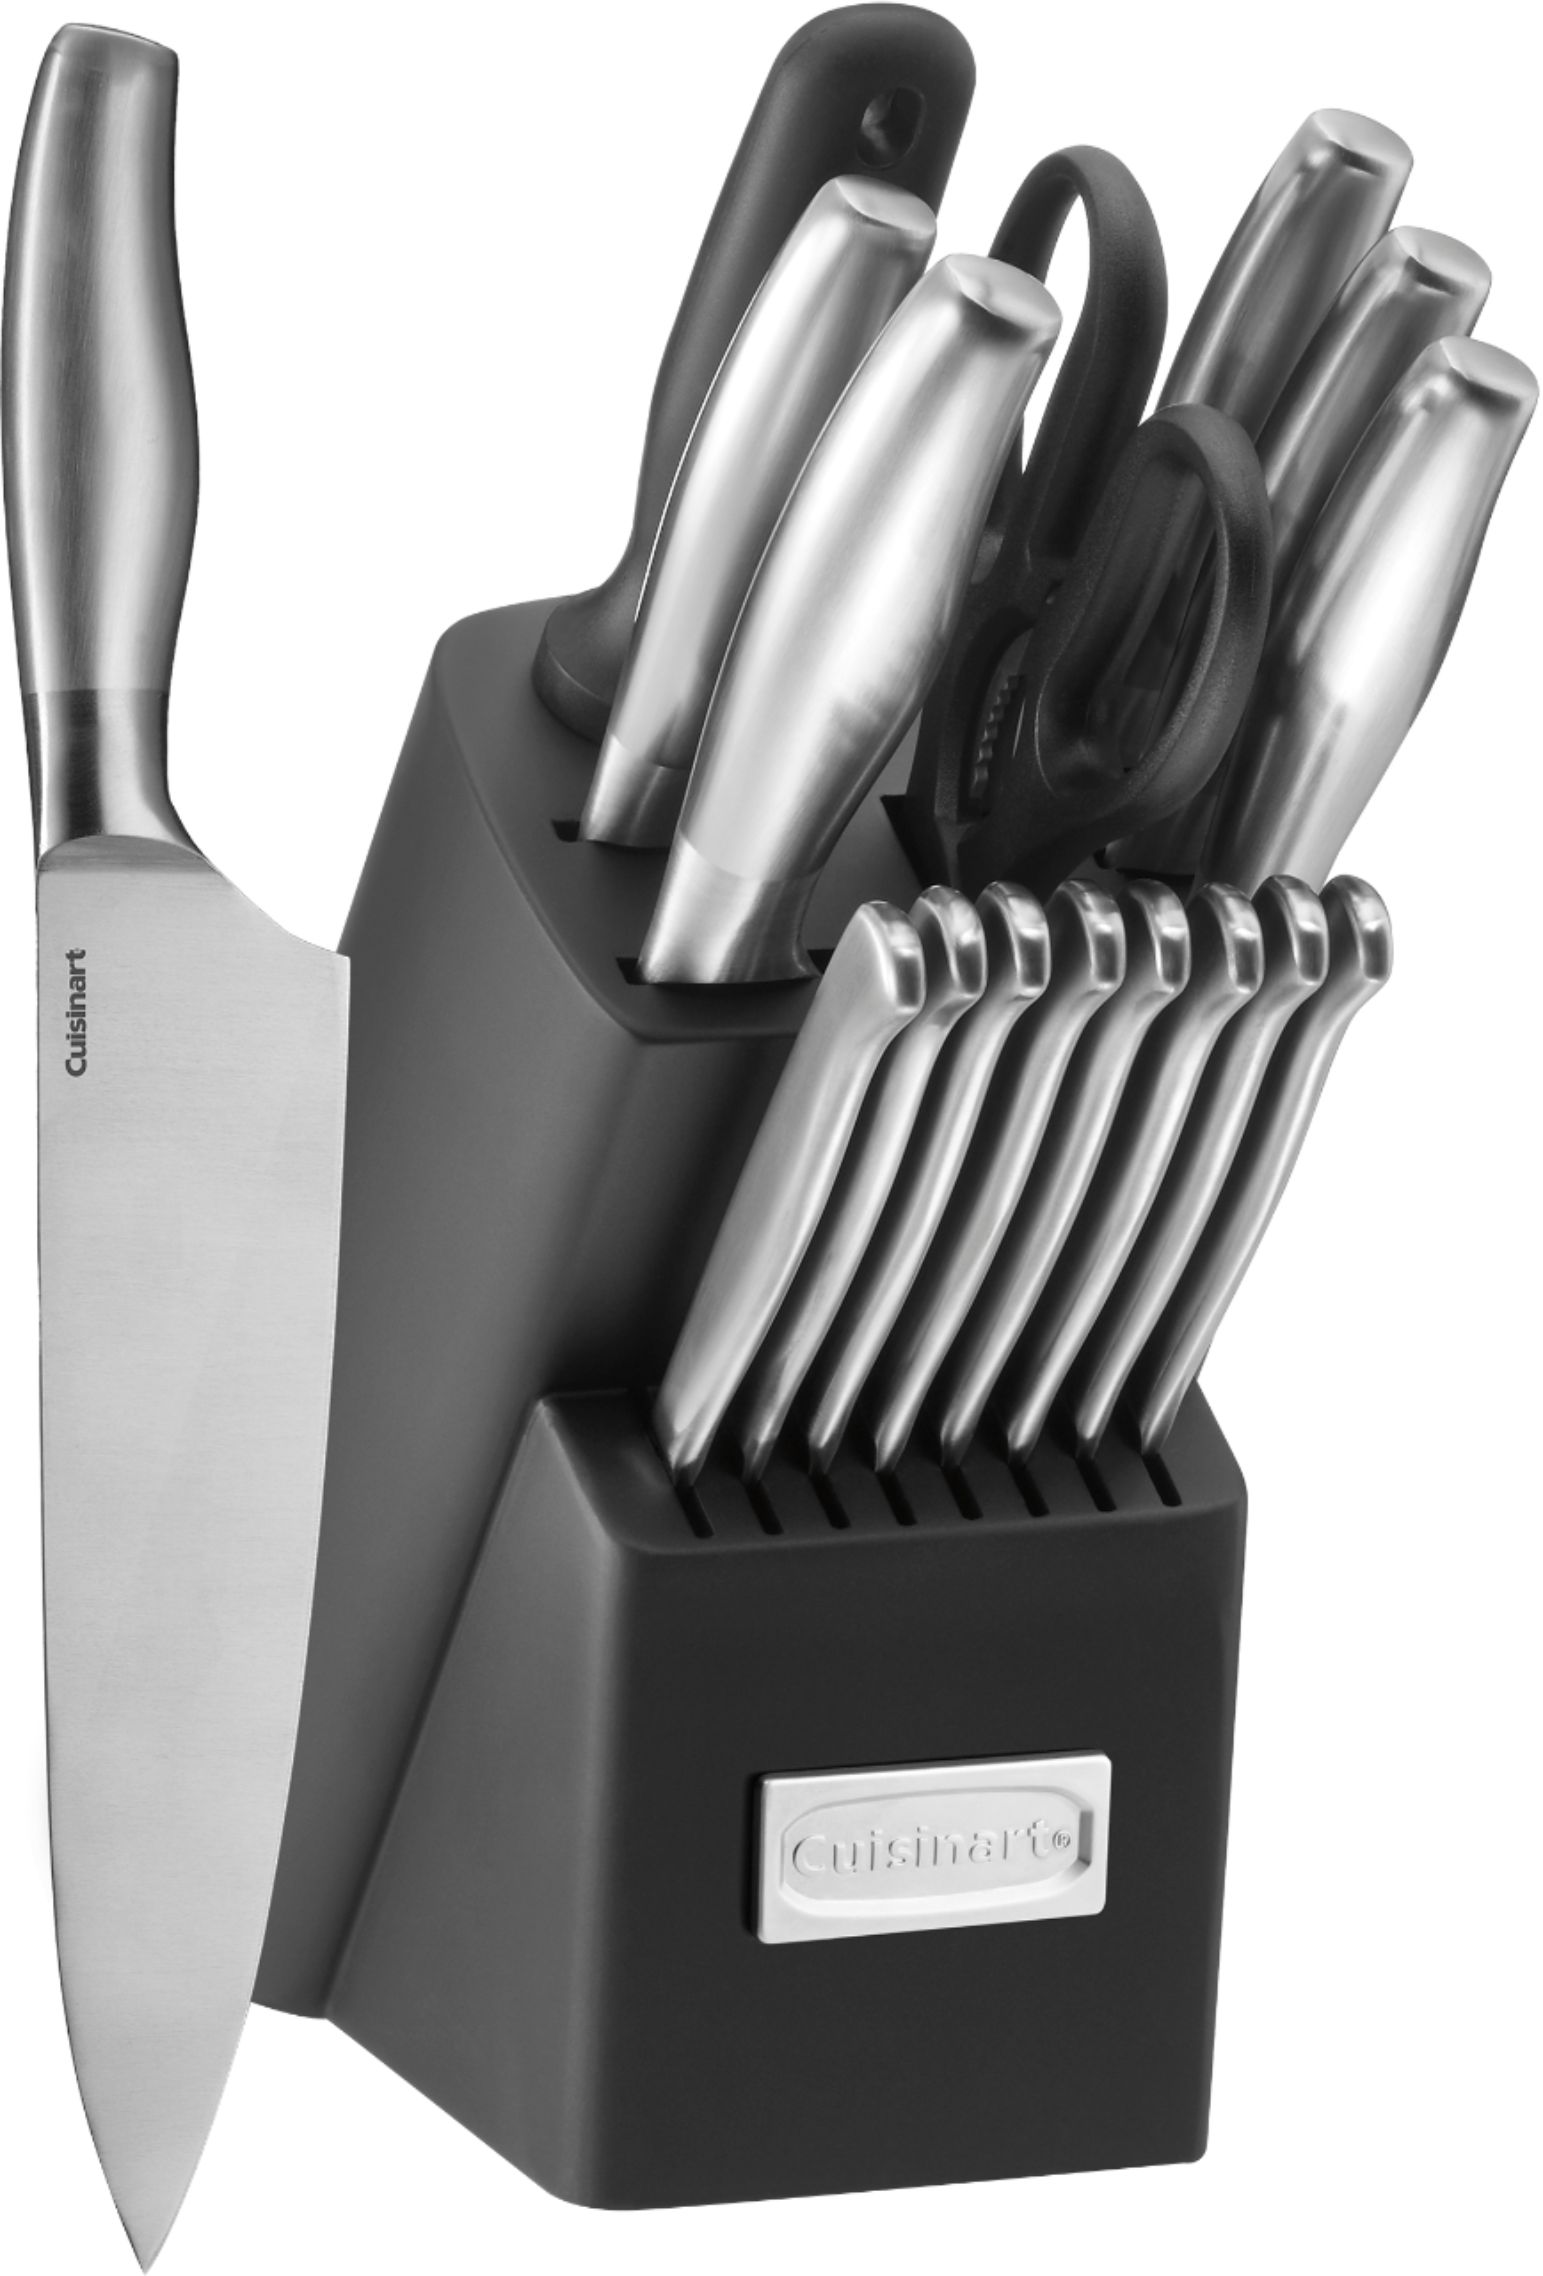 Cuisinart 17 PC Artiste Knife Block Set Silver C77SS-17P - Best Buy